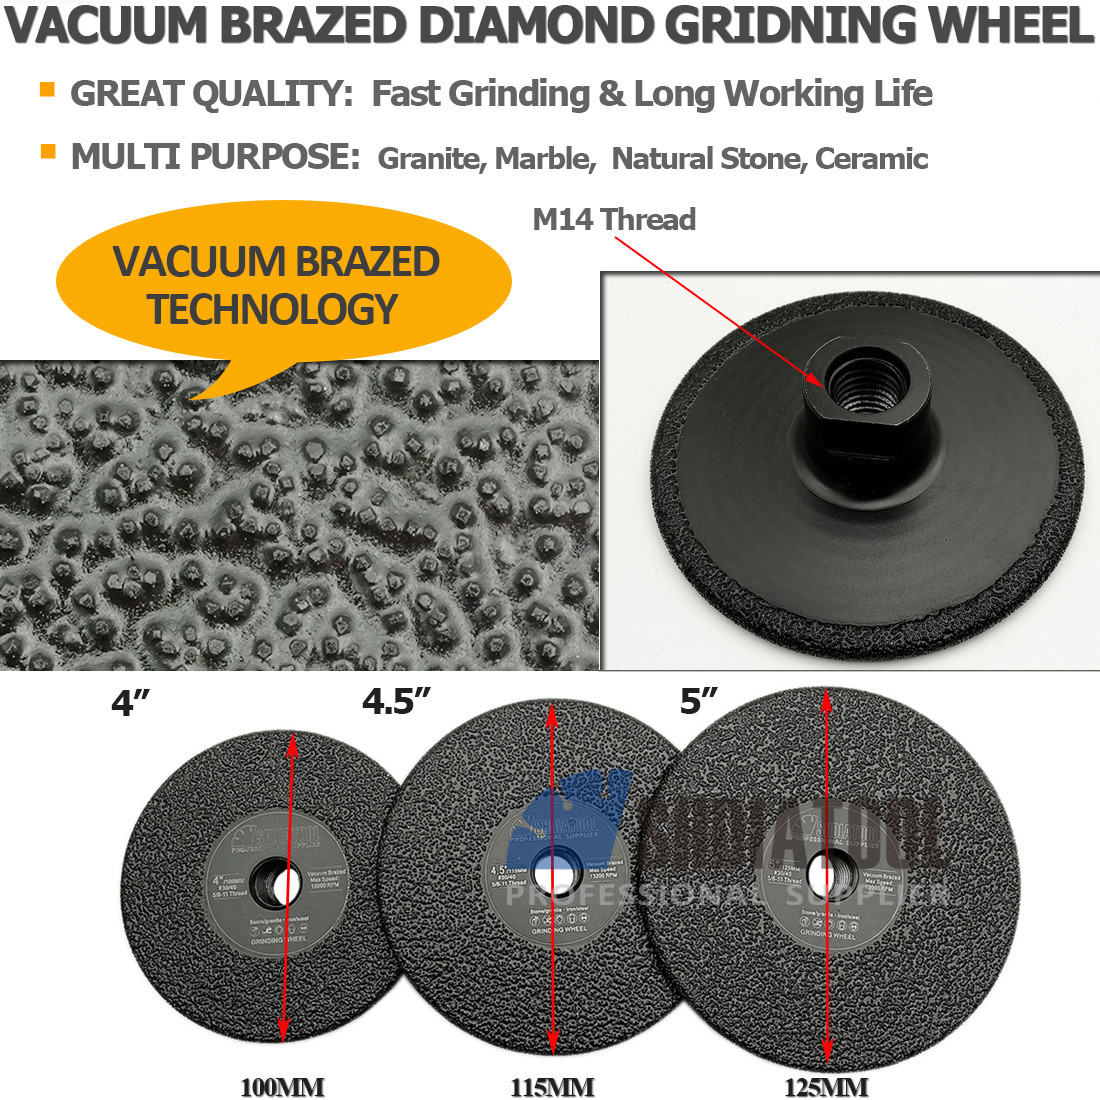 DIATOOL 1pc Convex Vacuum Brazed Diamond Grinding Cup Wheel 115mm Grinding Disc 